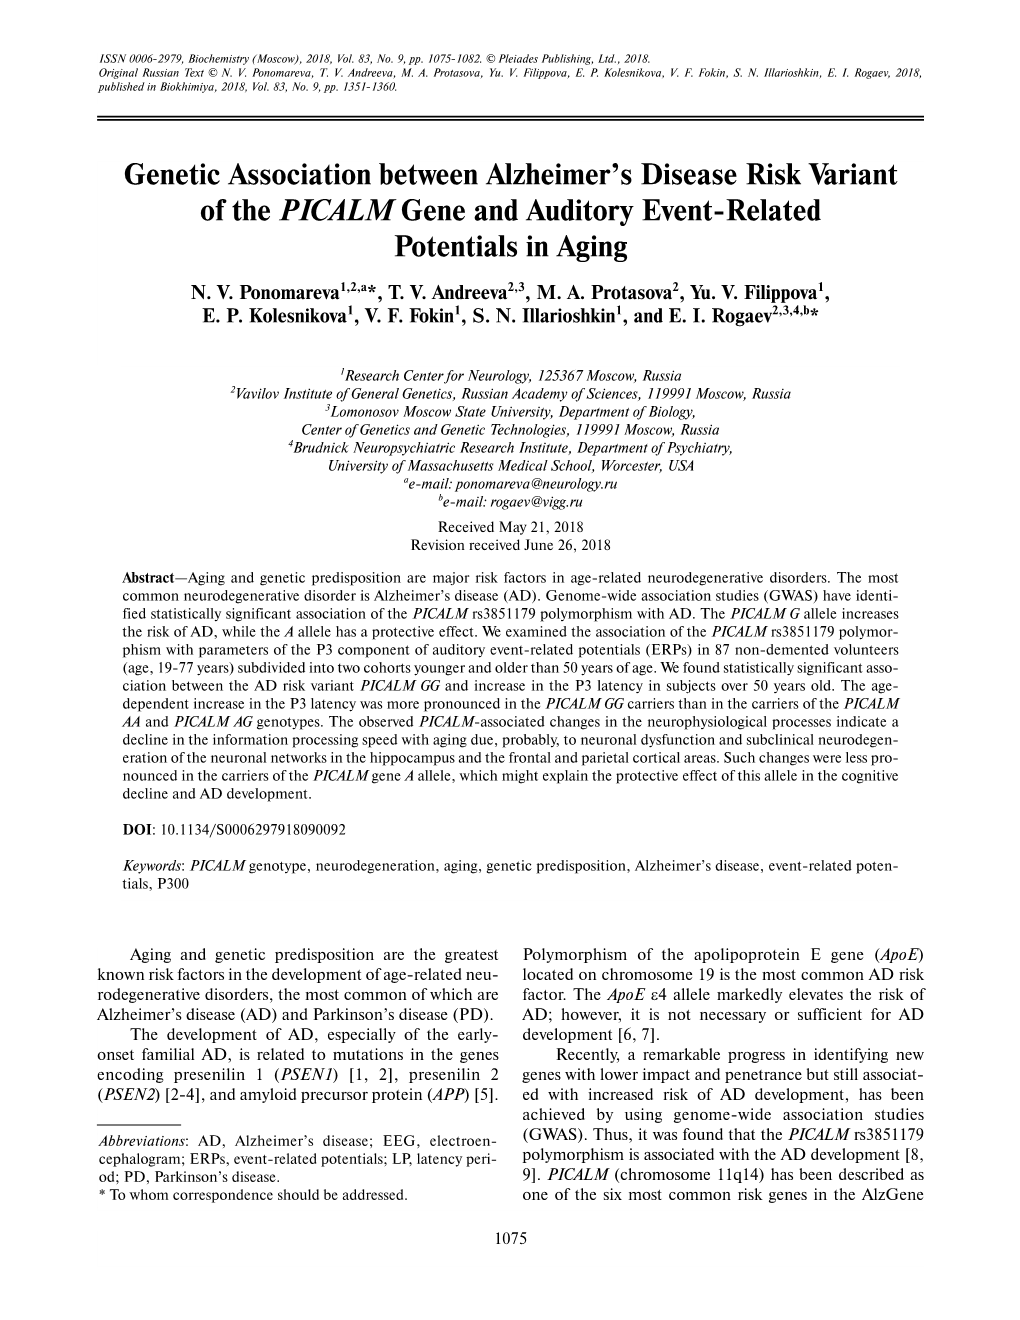 Genetic Association Between Alzheimer's Disease Risk Variant Of